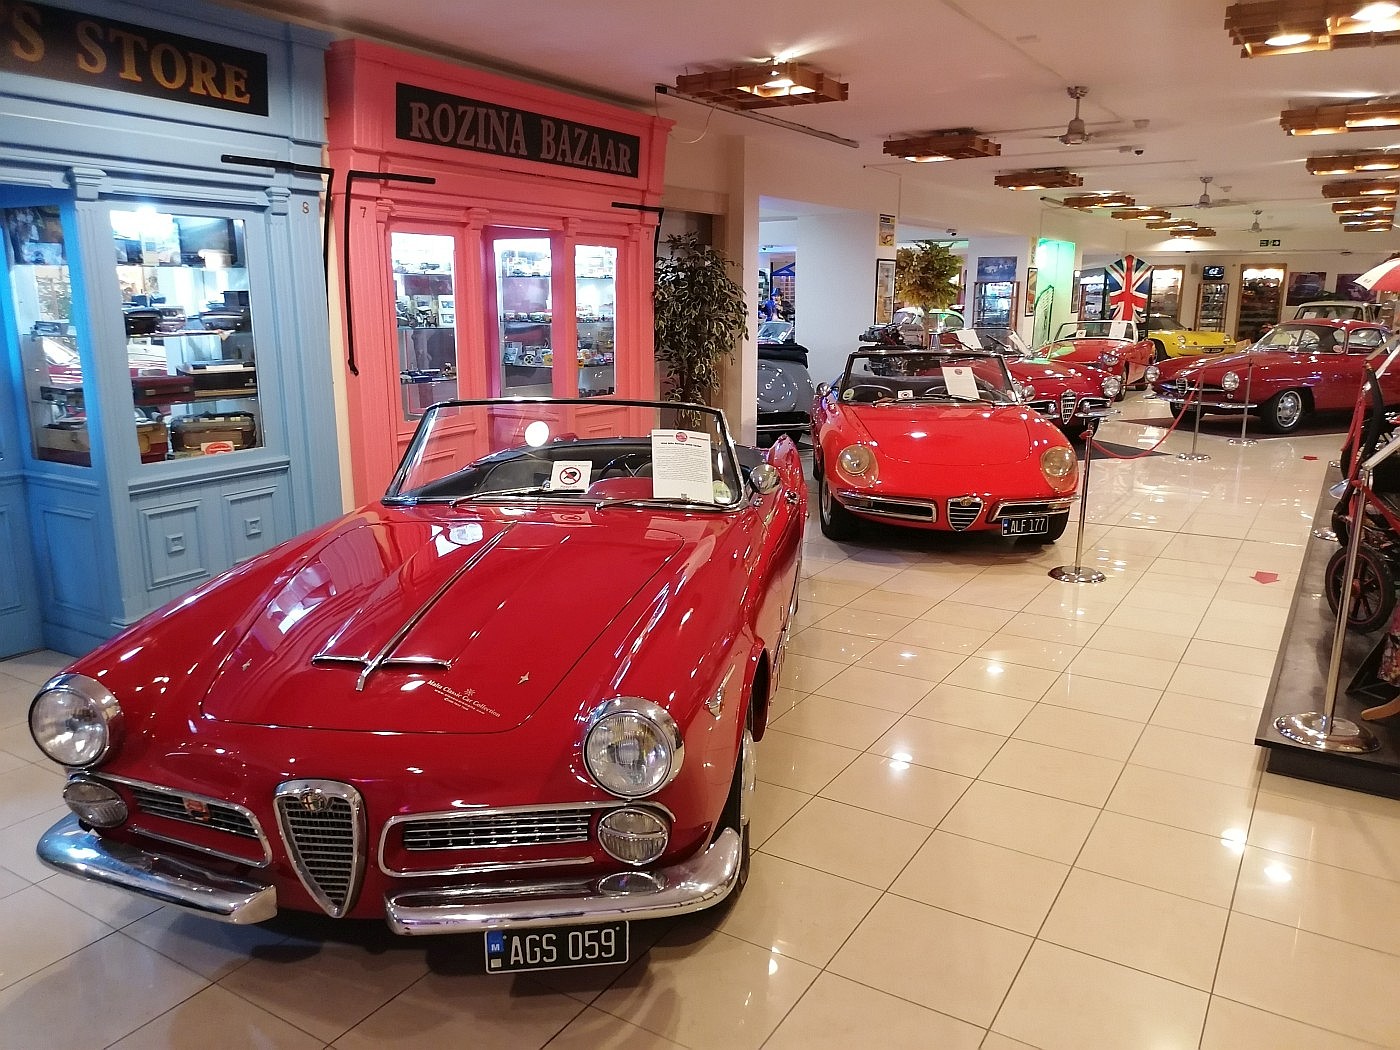 The Malta Classic Car Collection